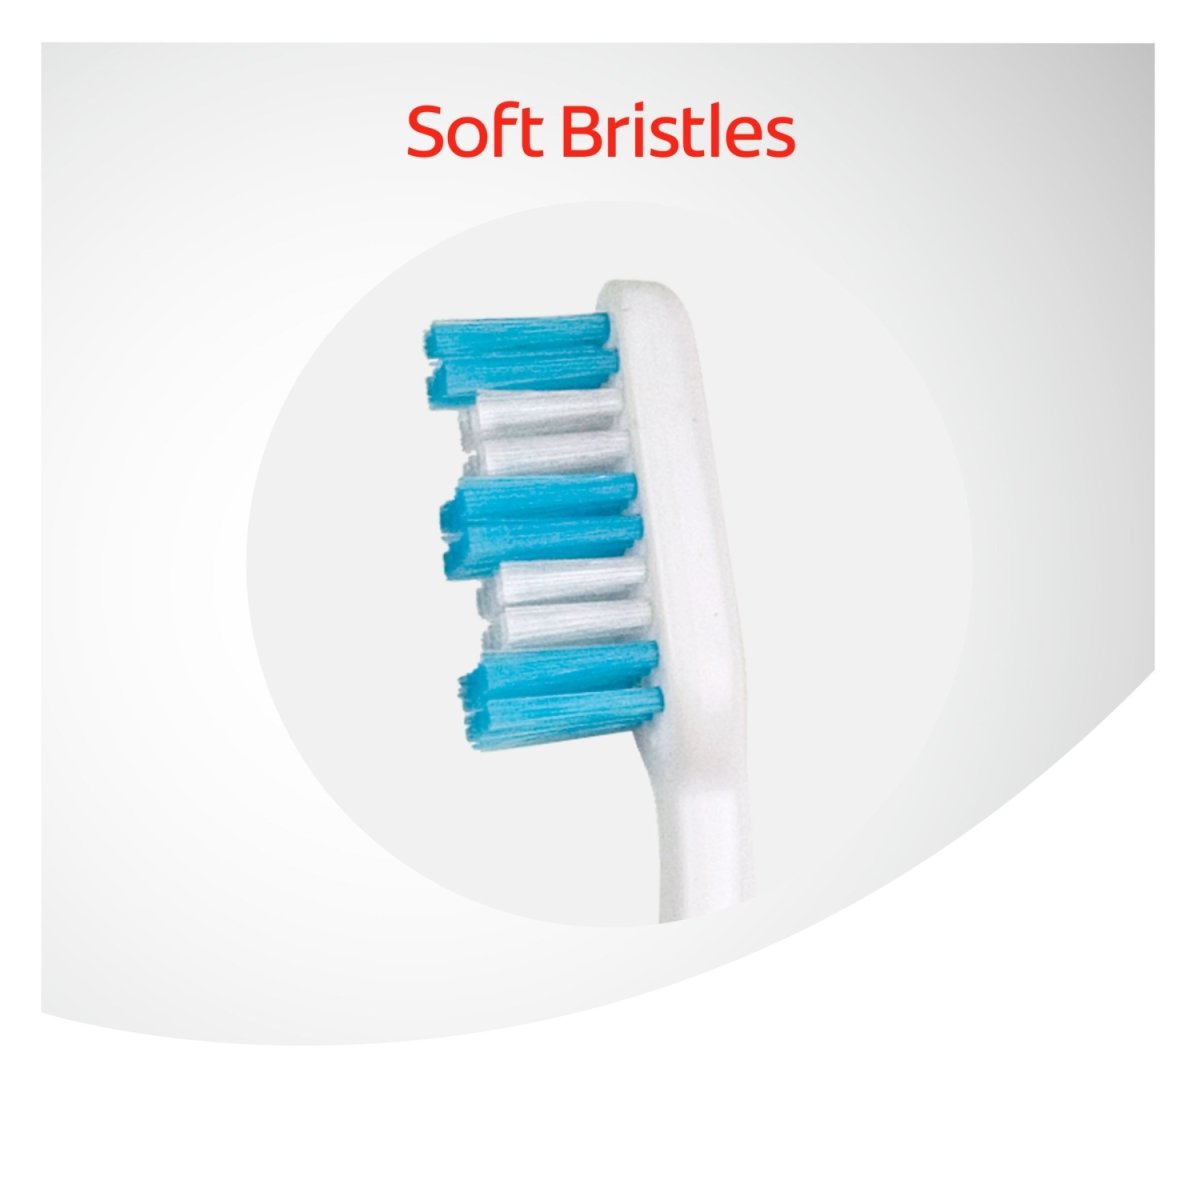 Colgate Portable Value Toothbrush - Intamarque 9300632074037